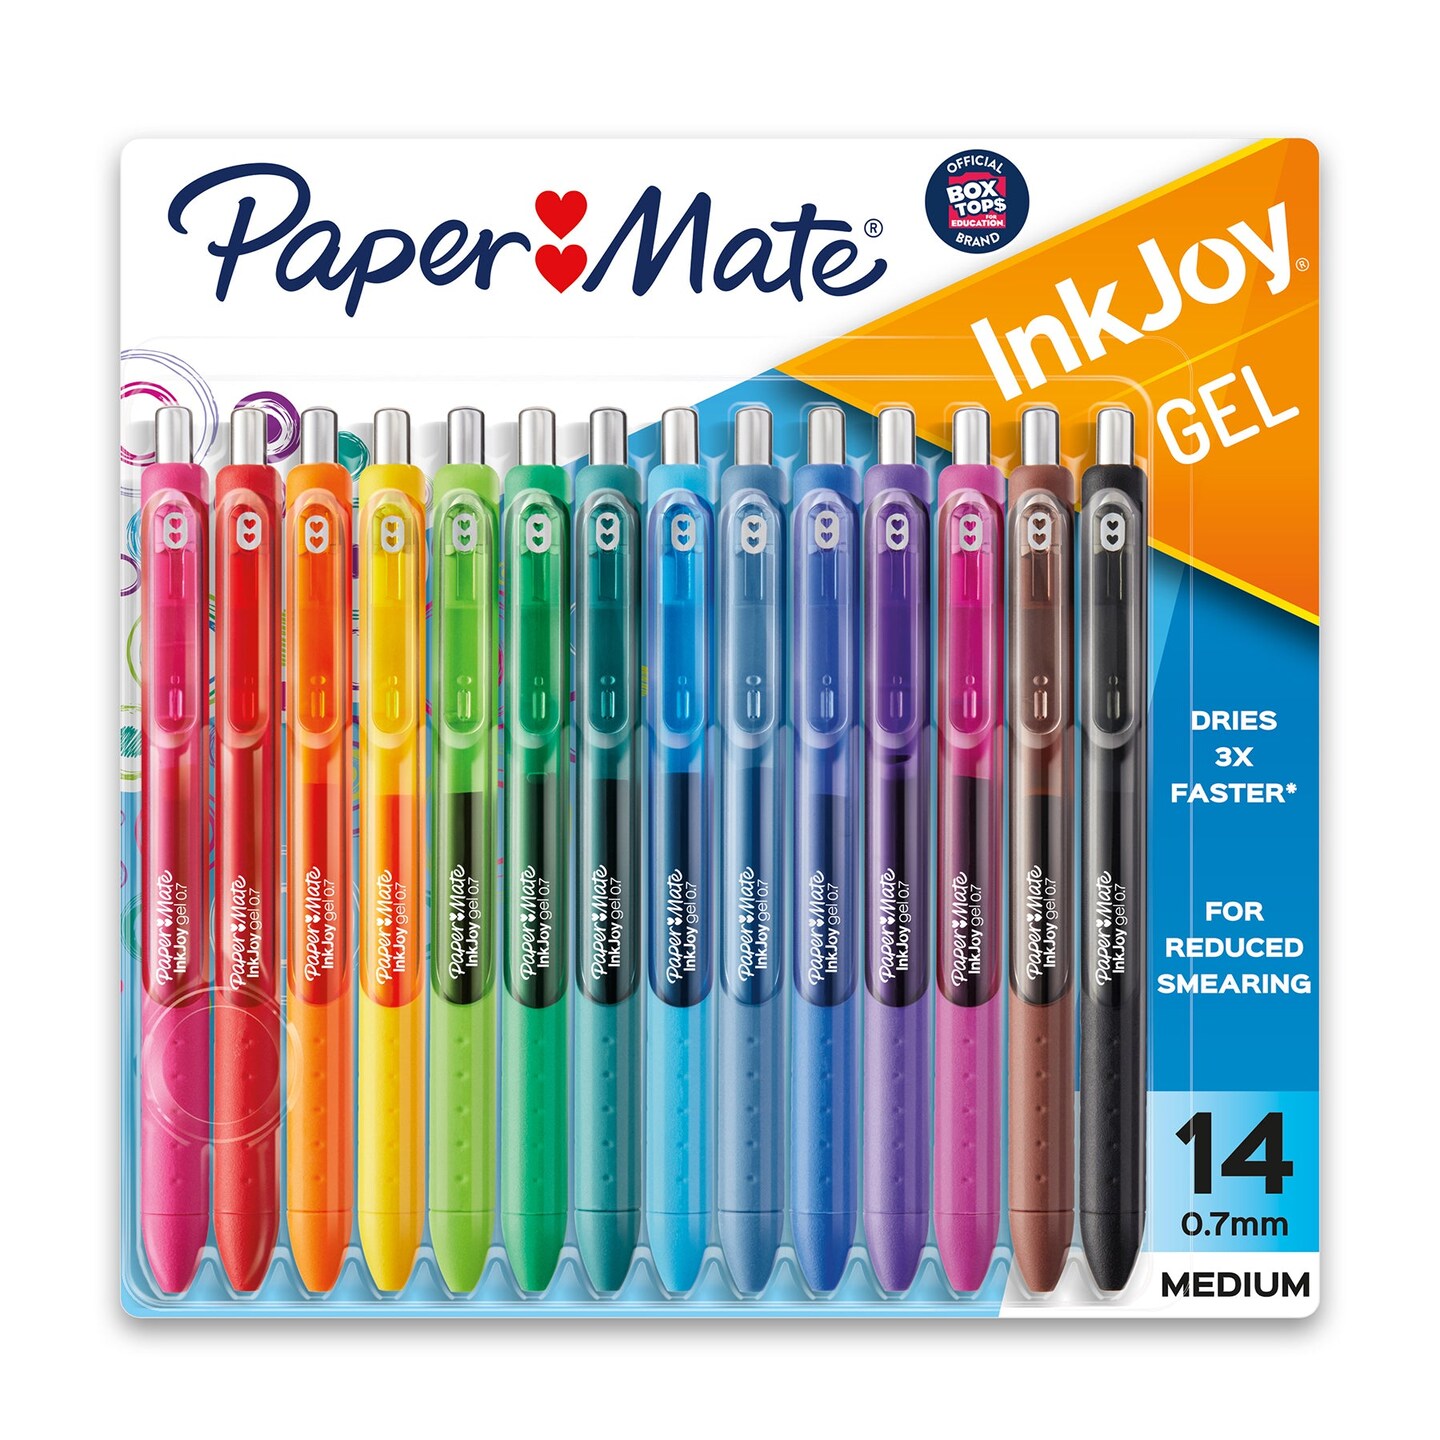 Yoobi Mini Gel Pens & Carrying Case | Neon, Metallic, Glitter Shades |  Multicolor Ink | 1.0mm Medium Tip | School, Home, Office Use, 24 Count  (Pack of